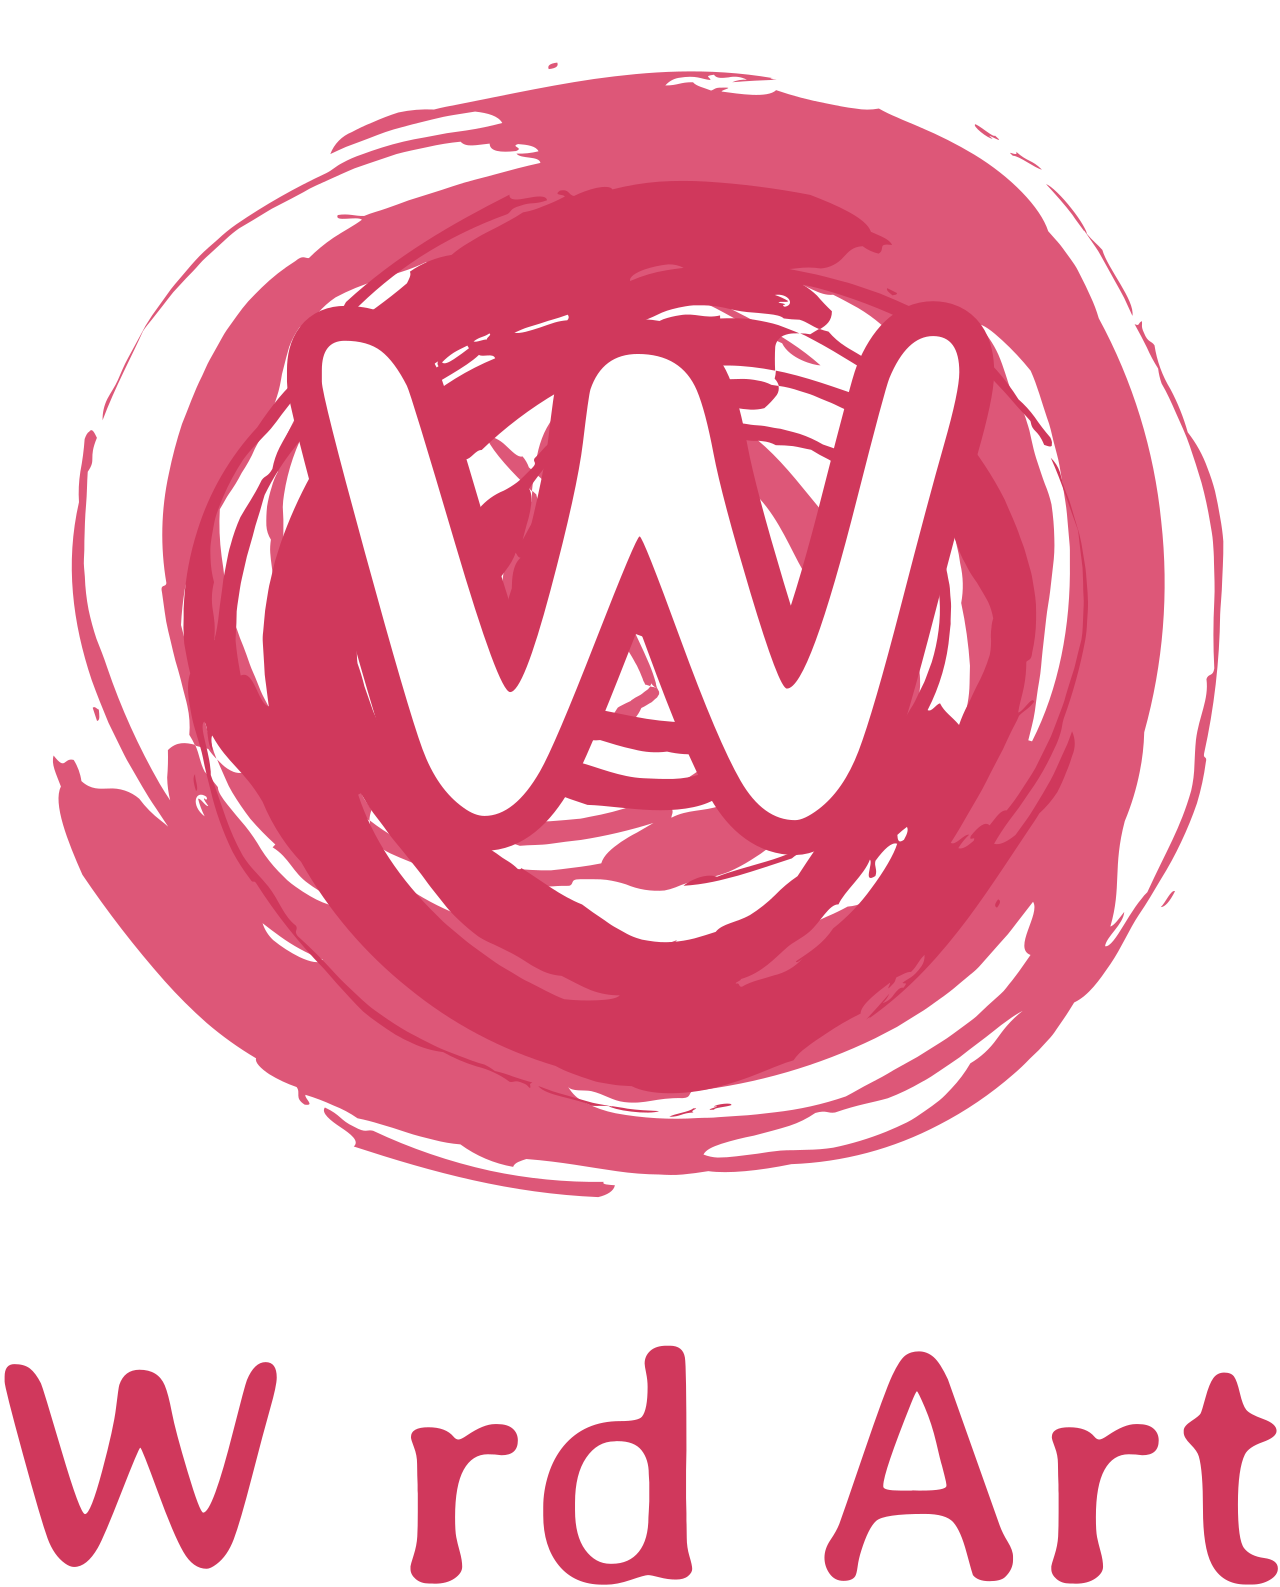 W^ rd Art's logo